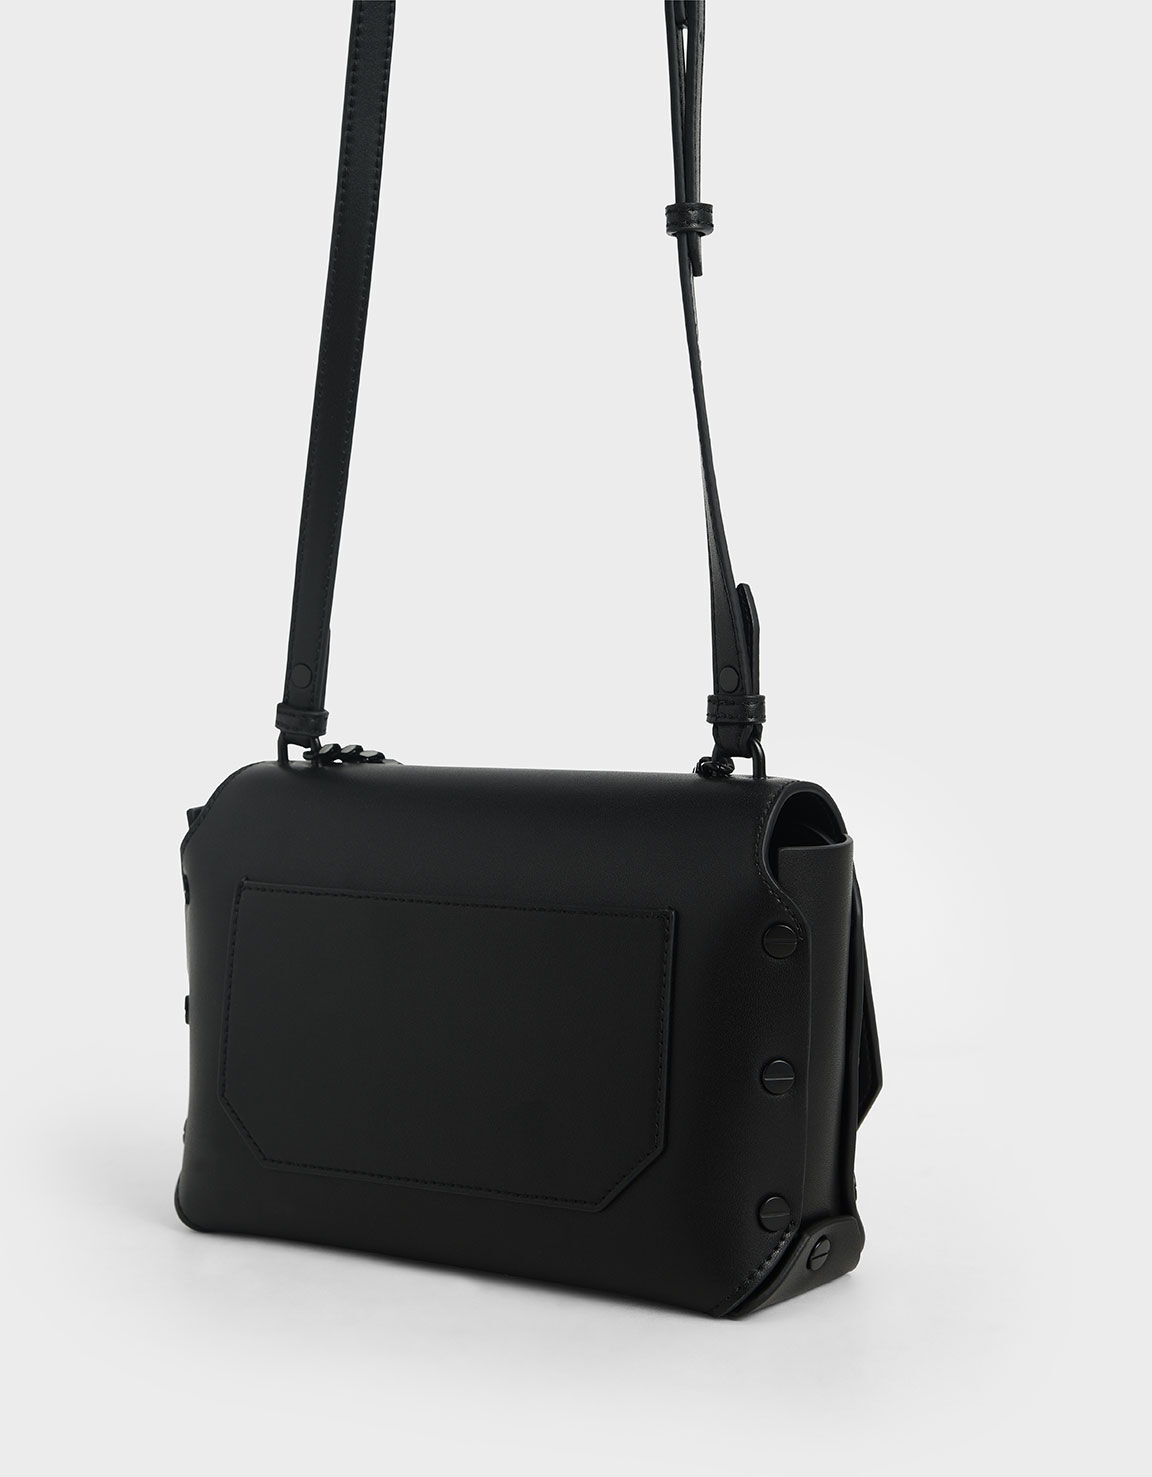 Ultra Matte Black Chain Handle Shoulder Bag - CHARLES & KEITH US